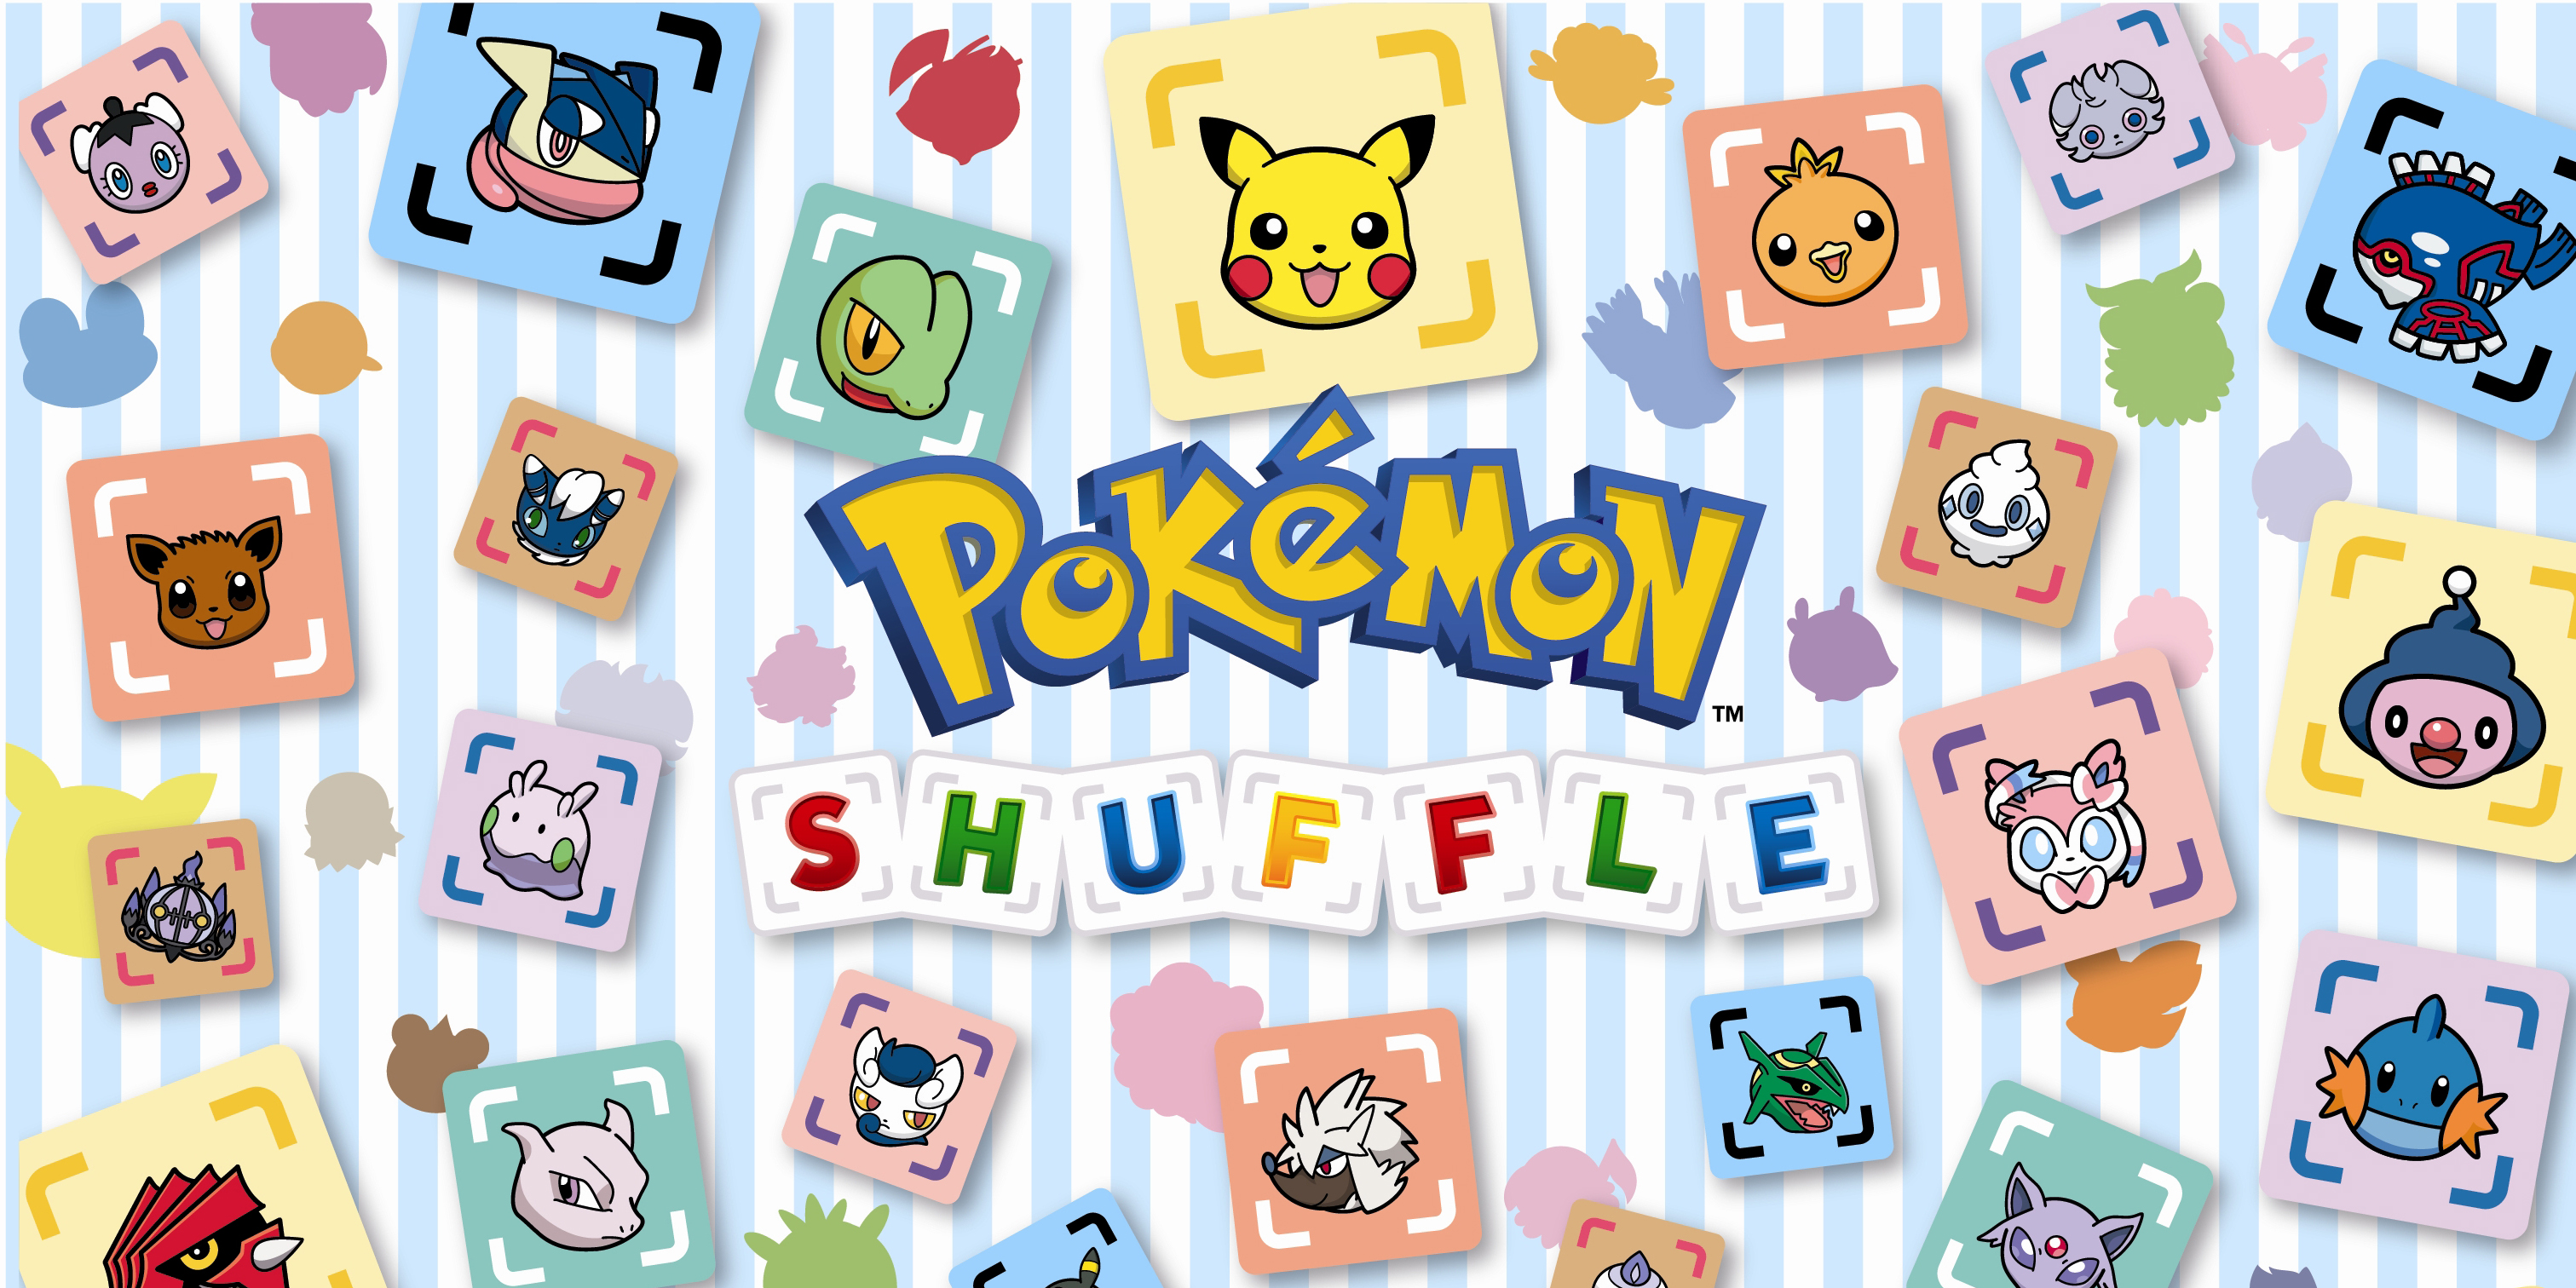 Pokémon Shuffle Mobile Now Available